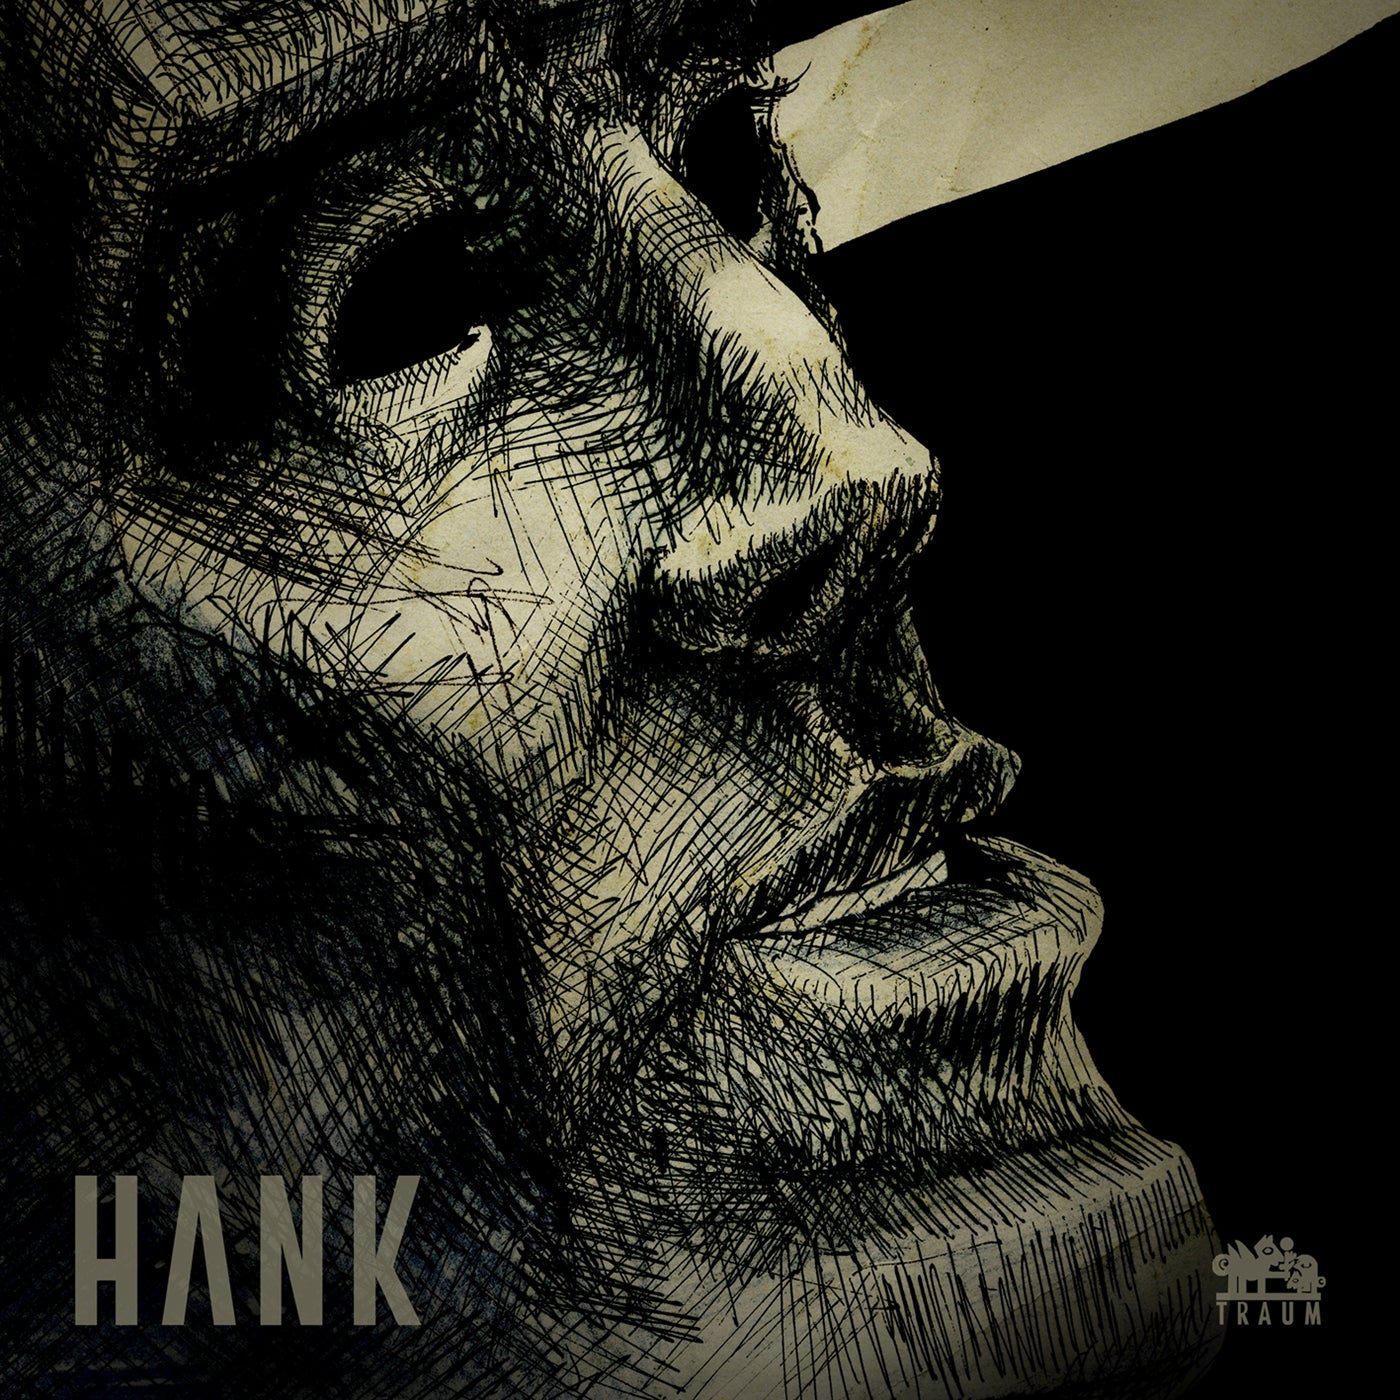 image cover: Anton Kling - Hank / TRAUMV257